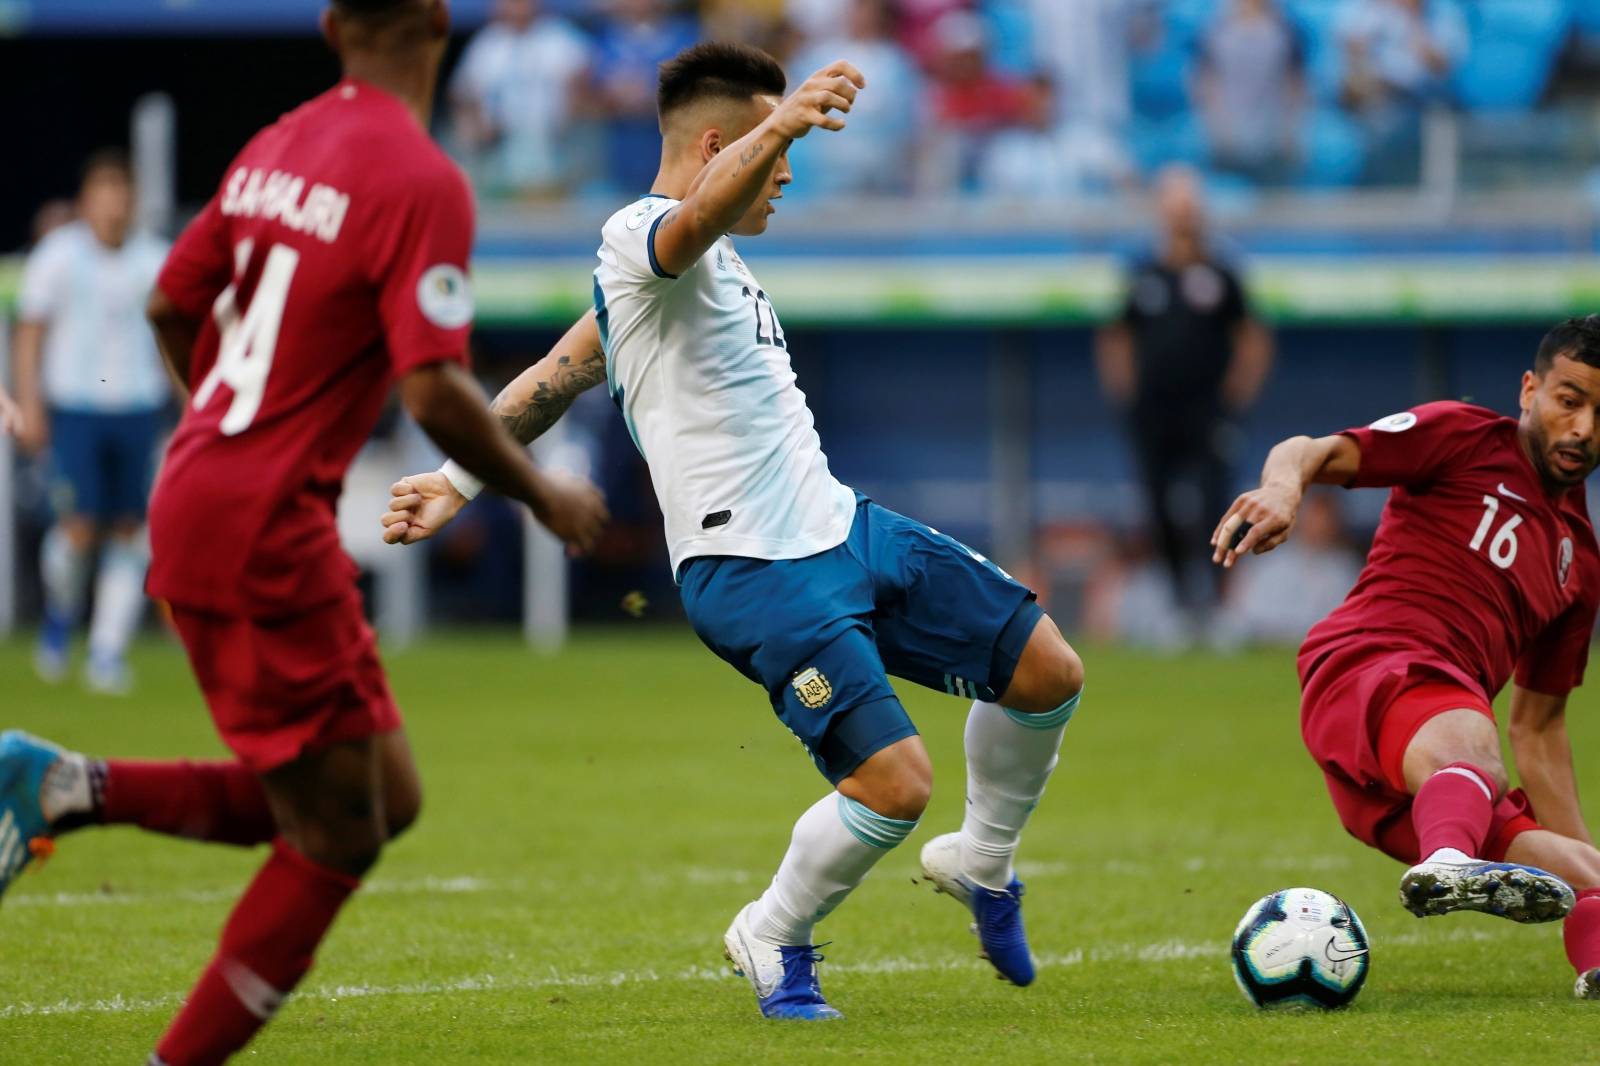 Copa America Brazil 2019 - Group B - Qatar v Argentina